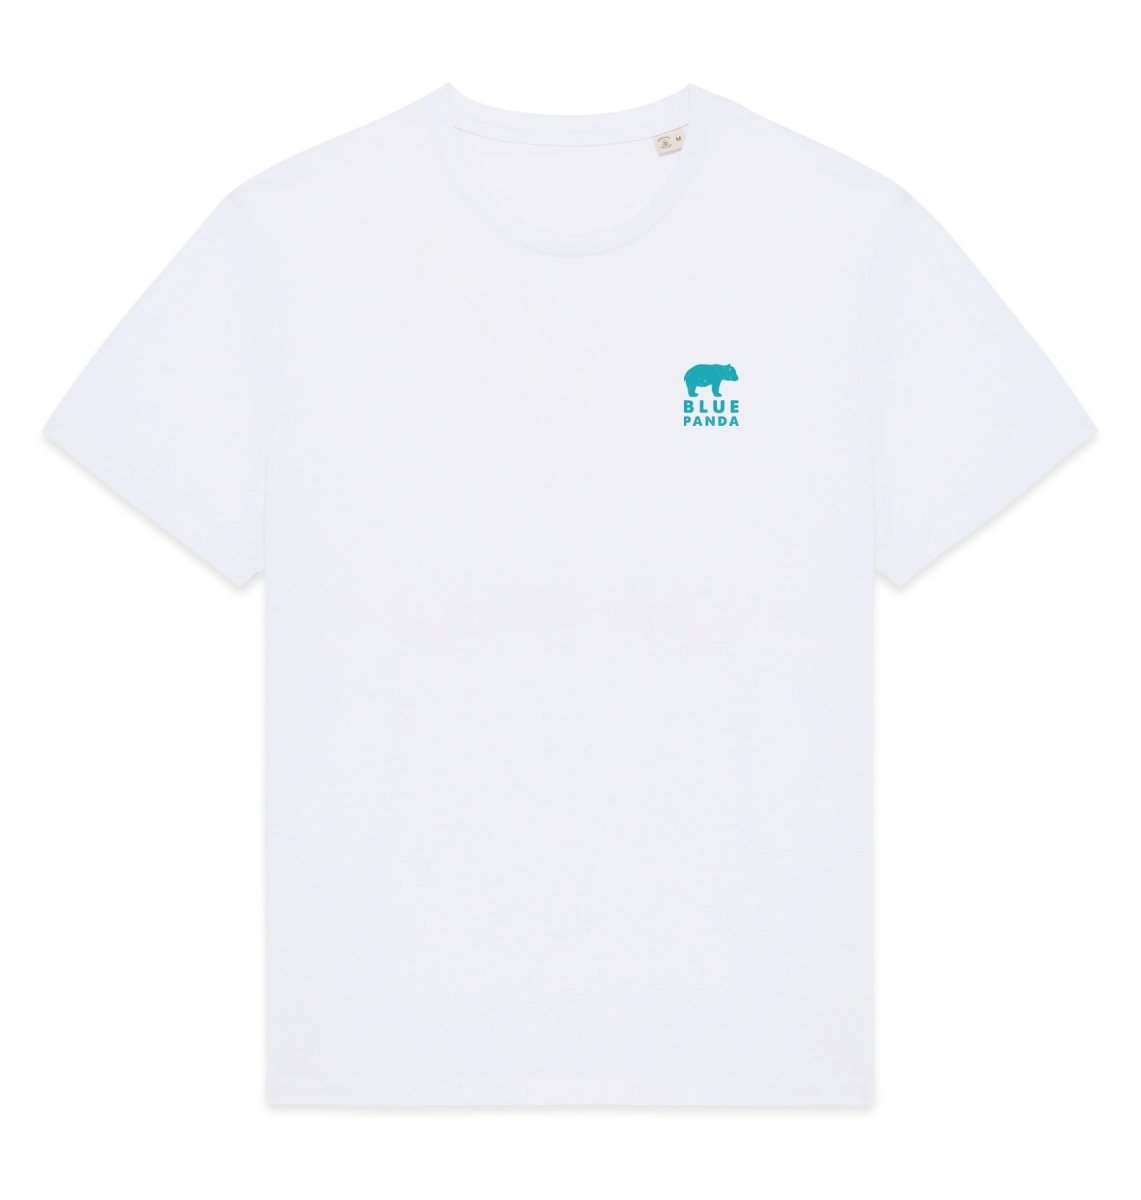 Nautilus Womens T-shirt - Blue Panda